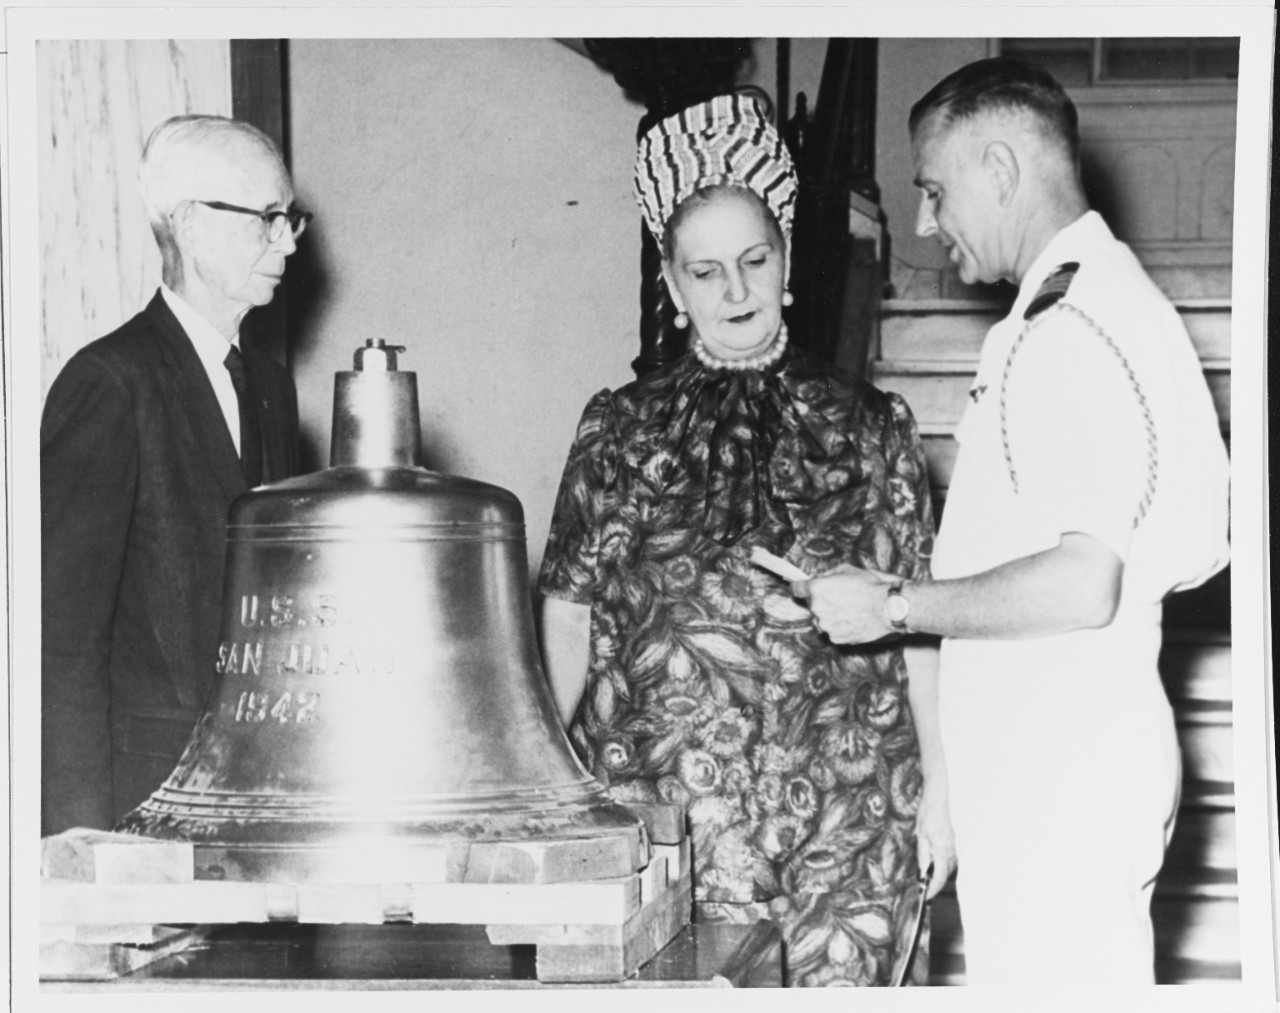 Presentation of USS SAN JUAN'S Bell